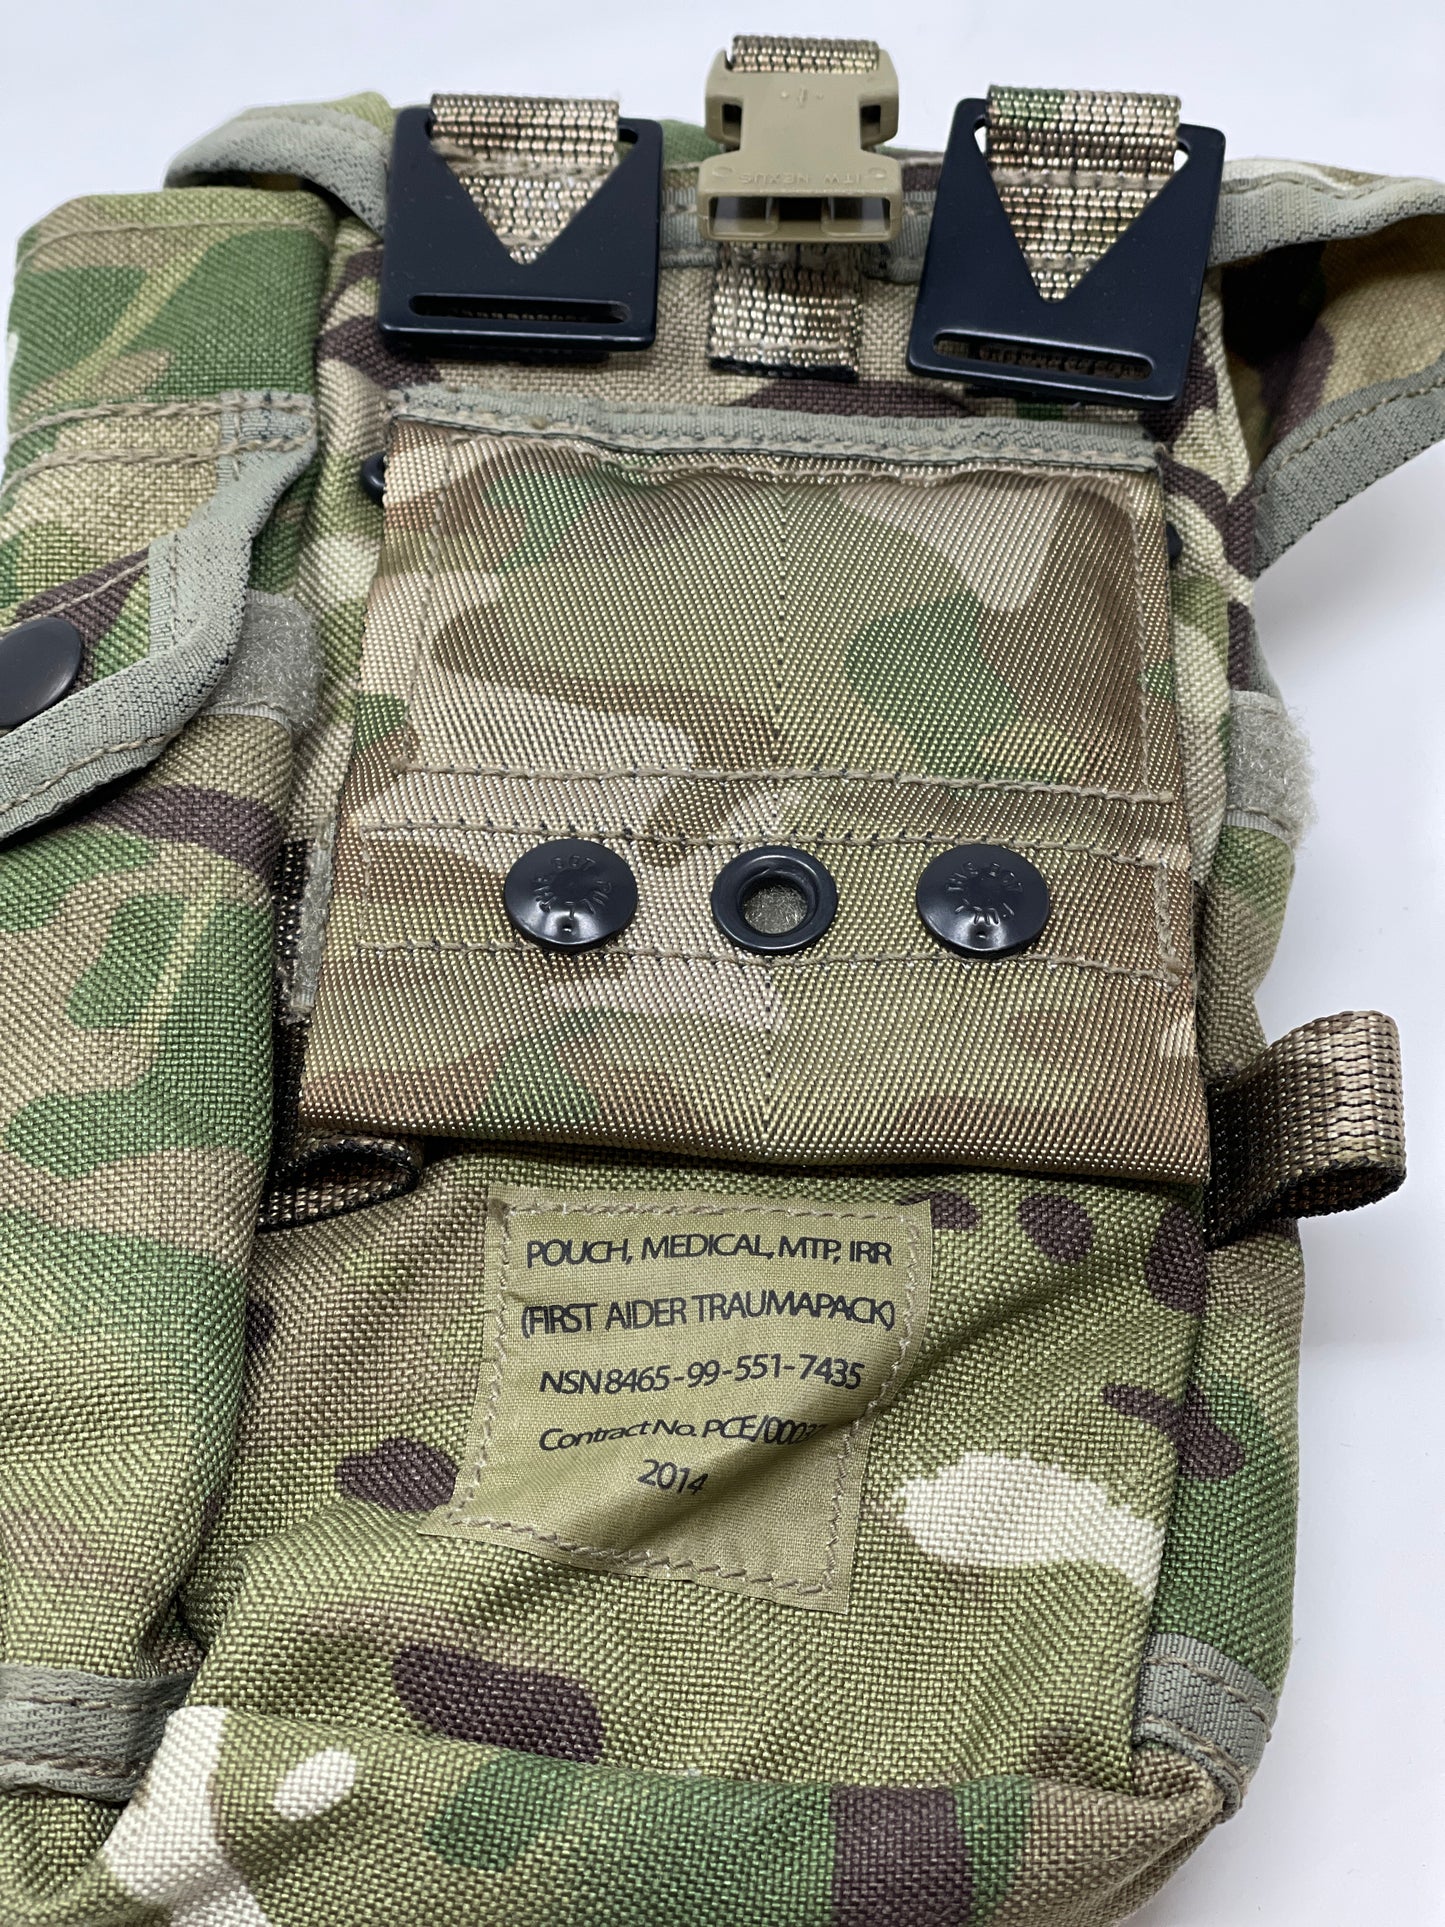 British Army Pouch Medical MTP IRR Trauma Pack